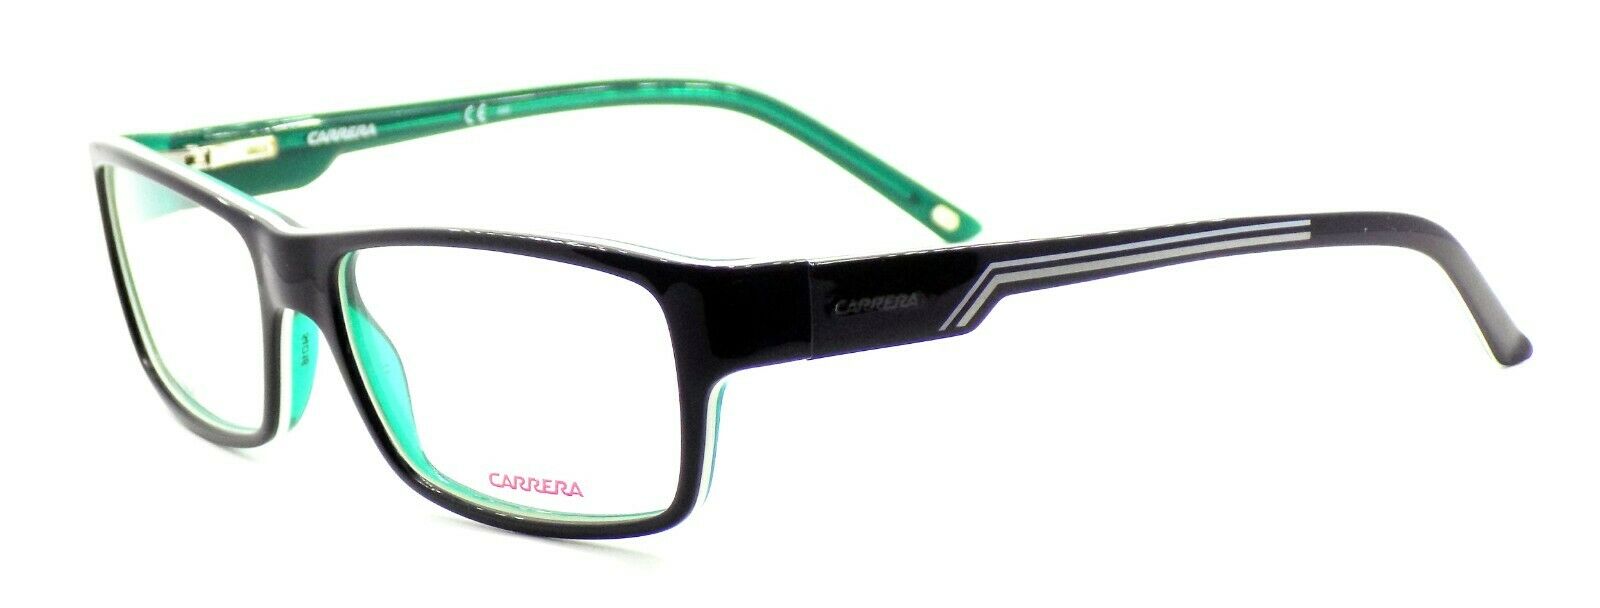 1-Carrera CA6183 H2M Unisex Eyeglasses Frames 54-16-135 Black / Green + CASE-762753299604-IKSpecs